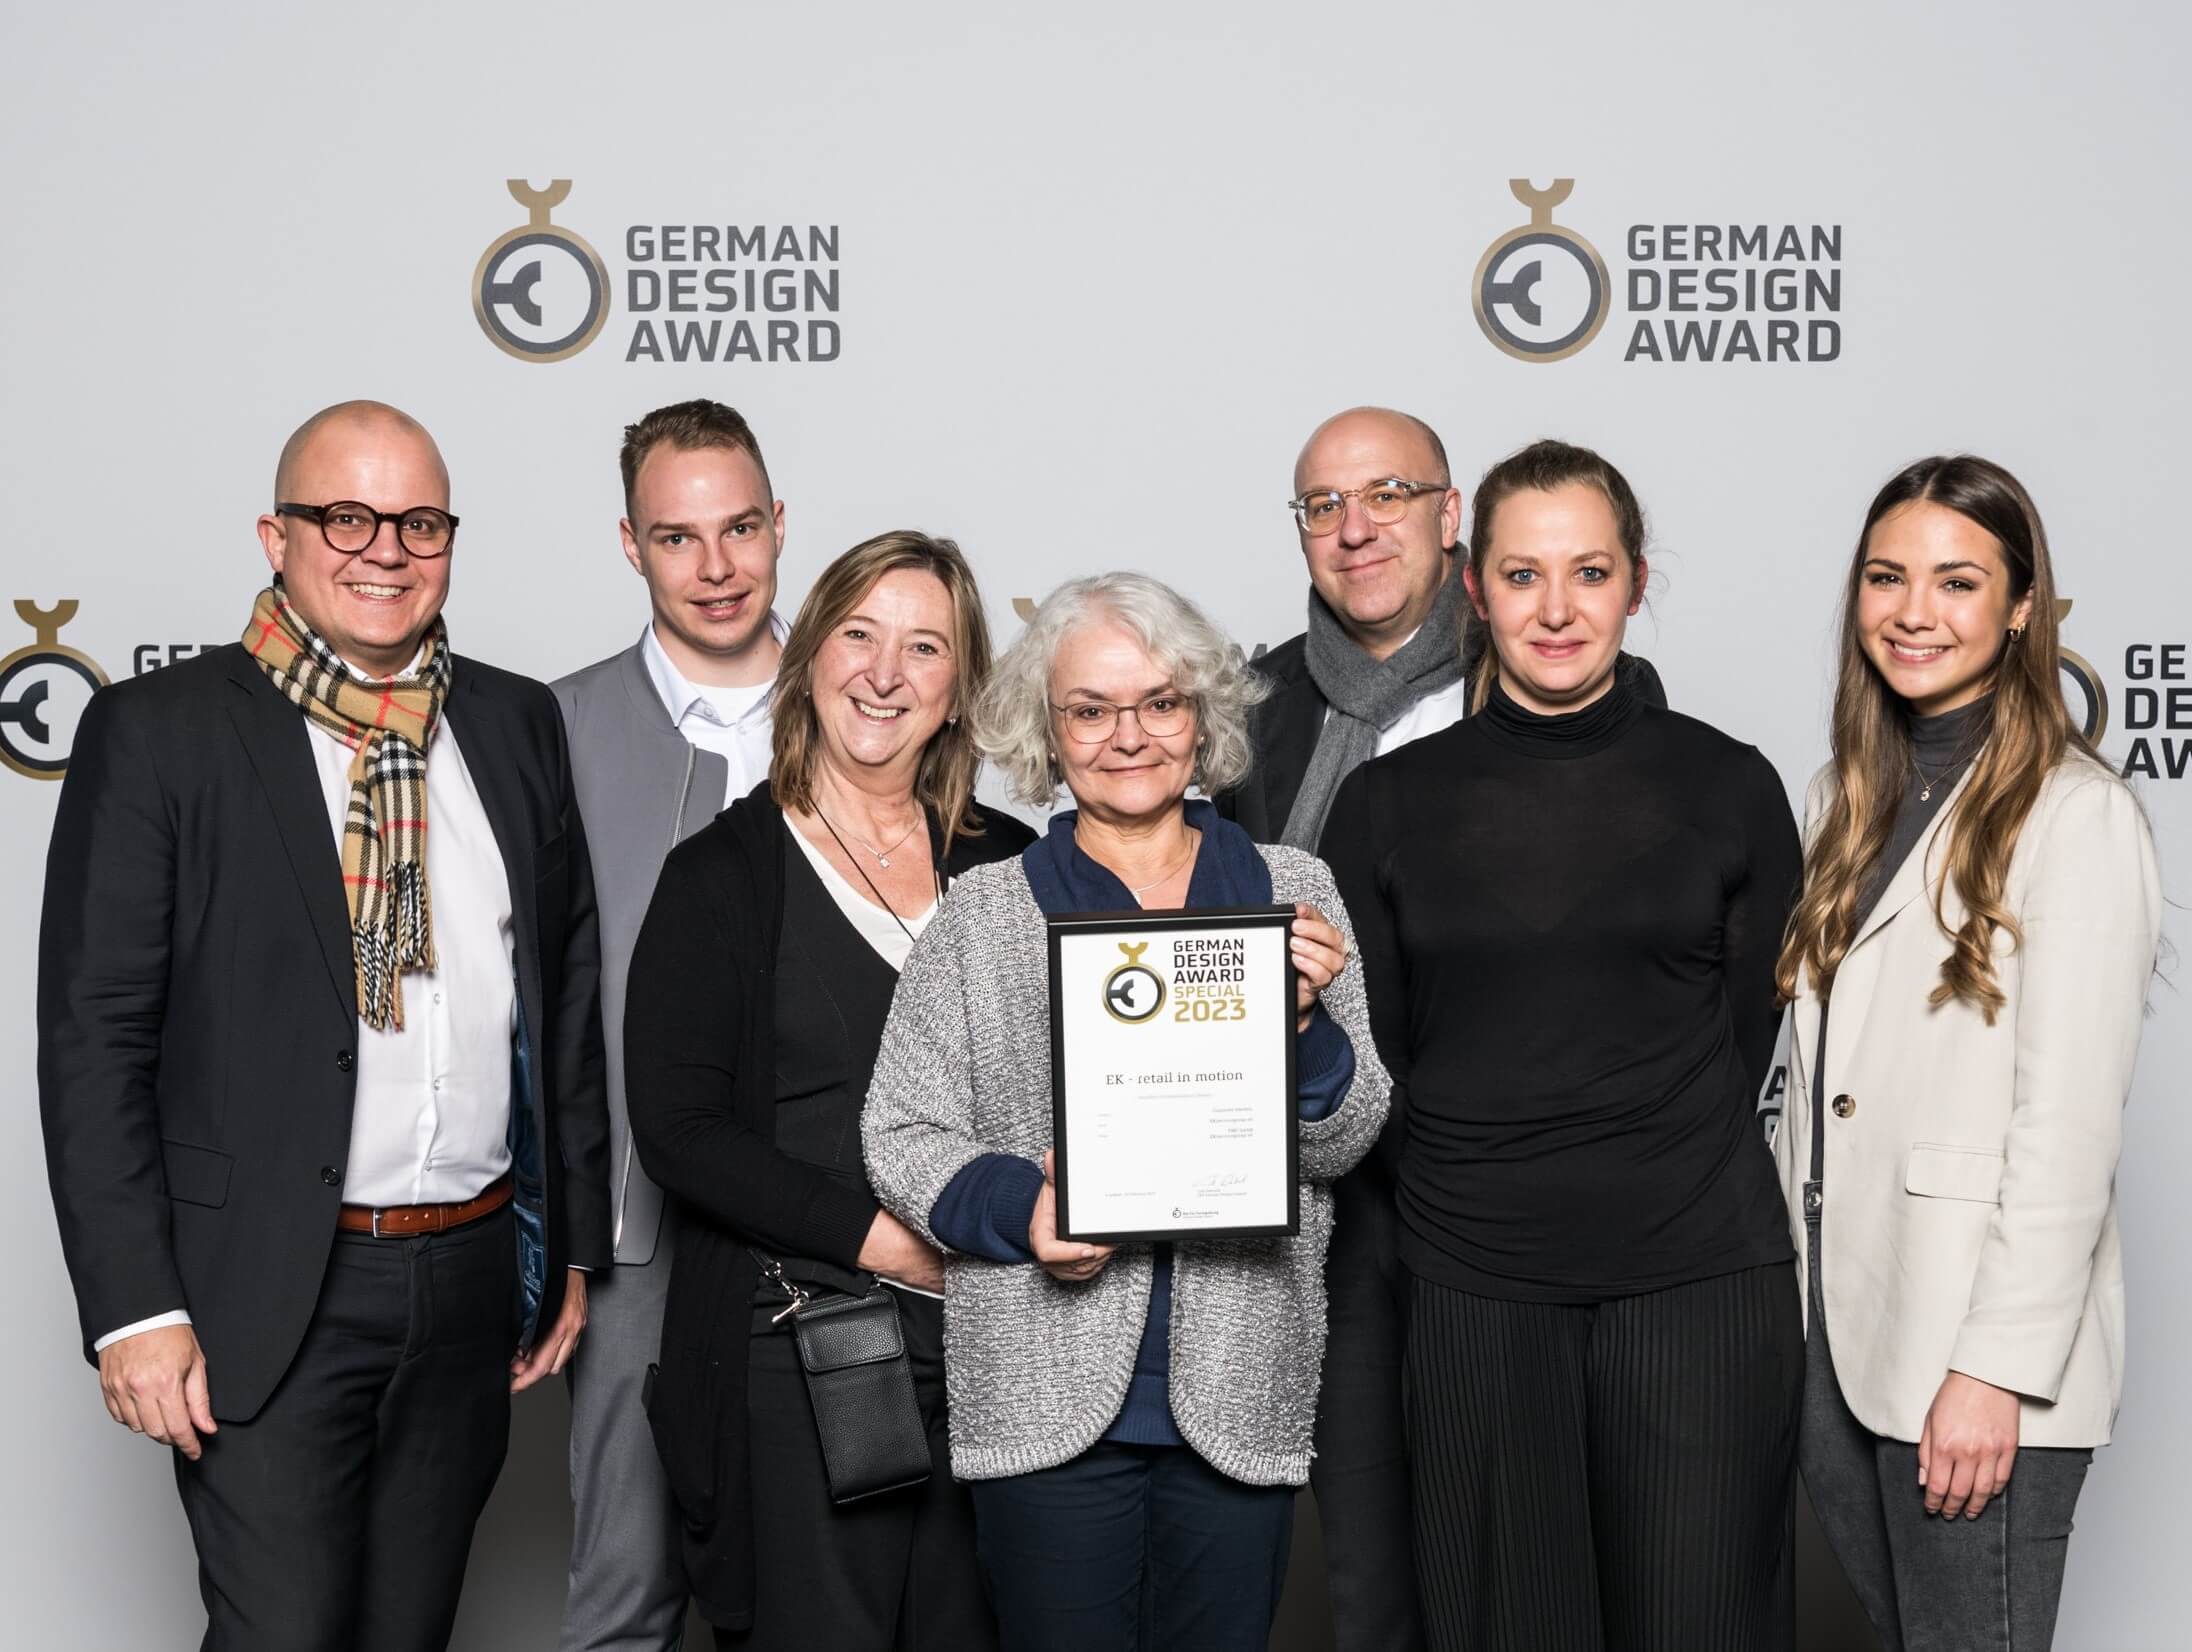 German Brand Award 2022